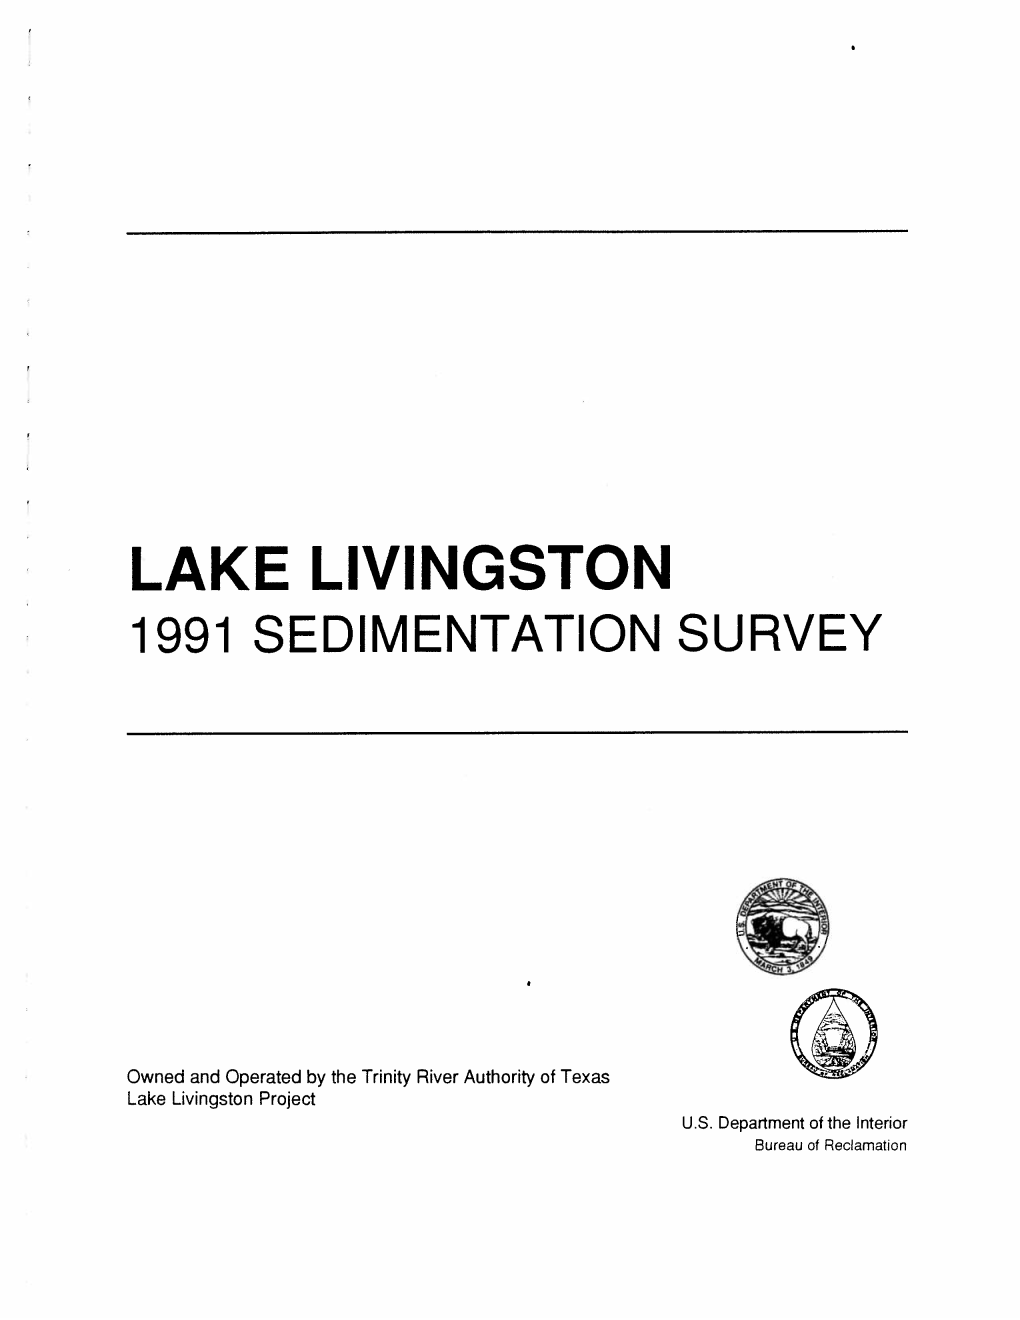 Lake Livingston 1991 Sedimentation Survey